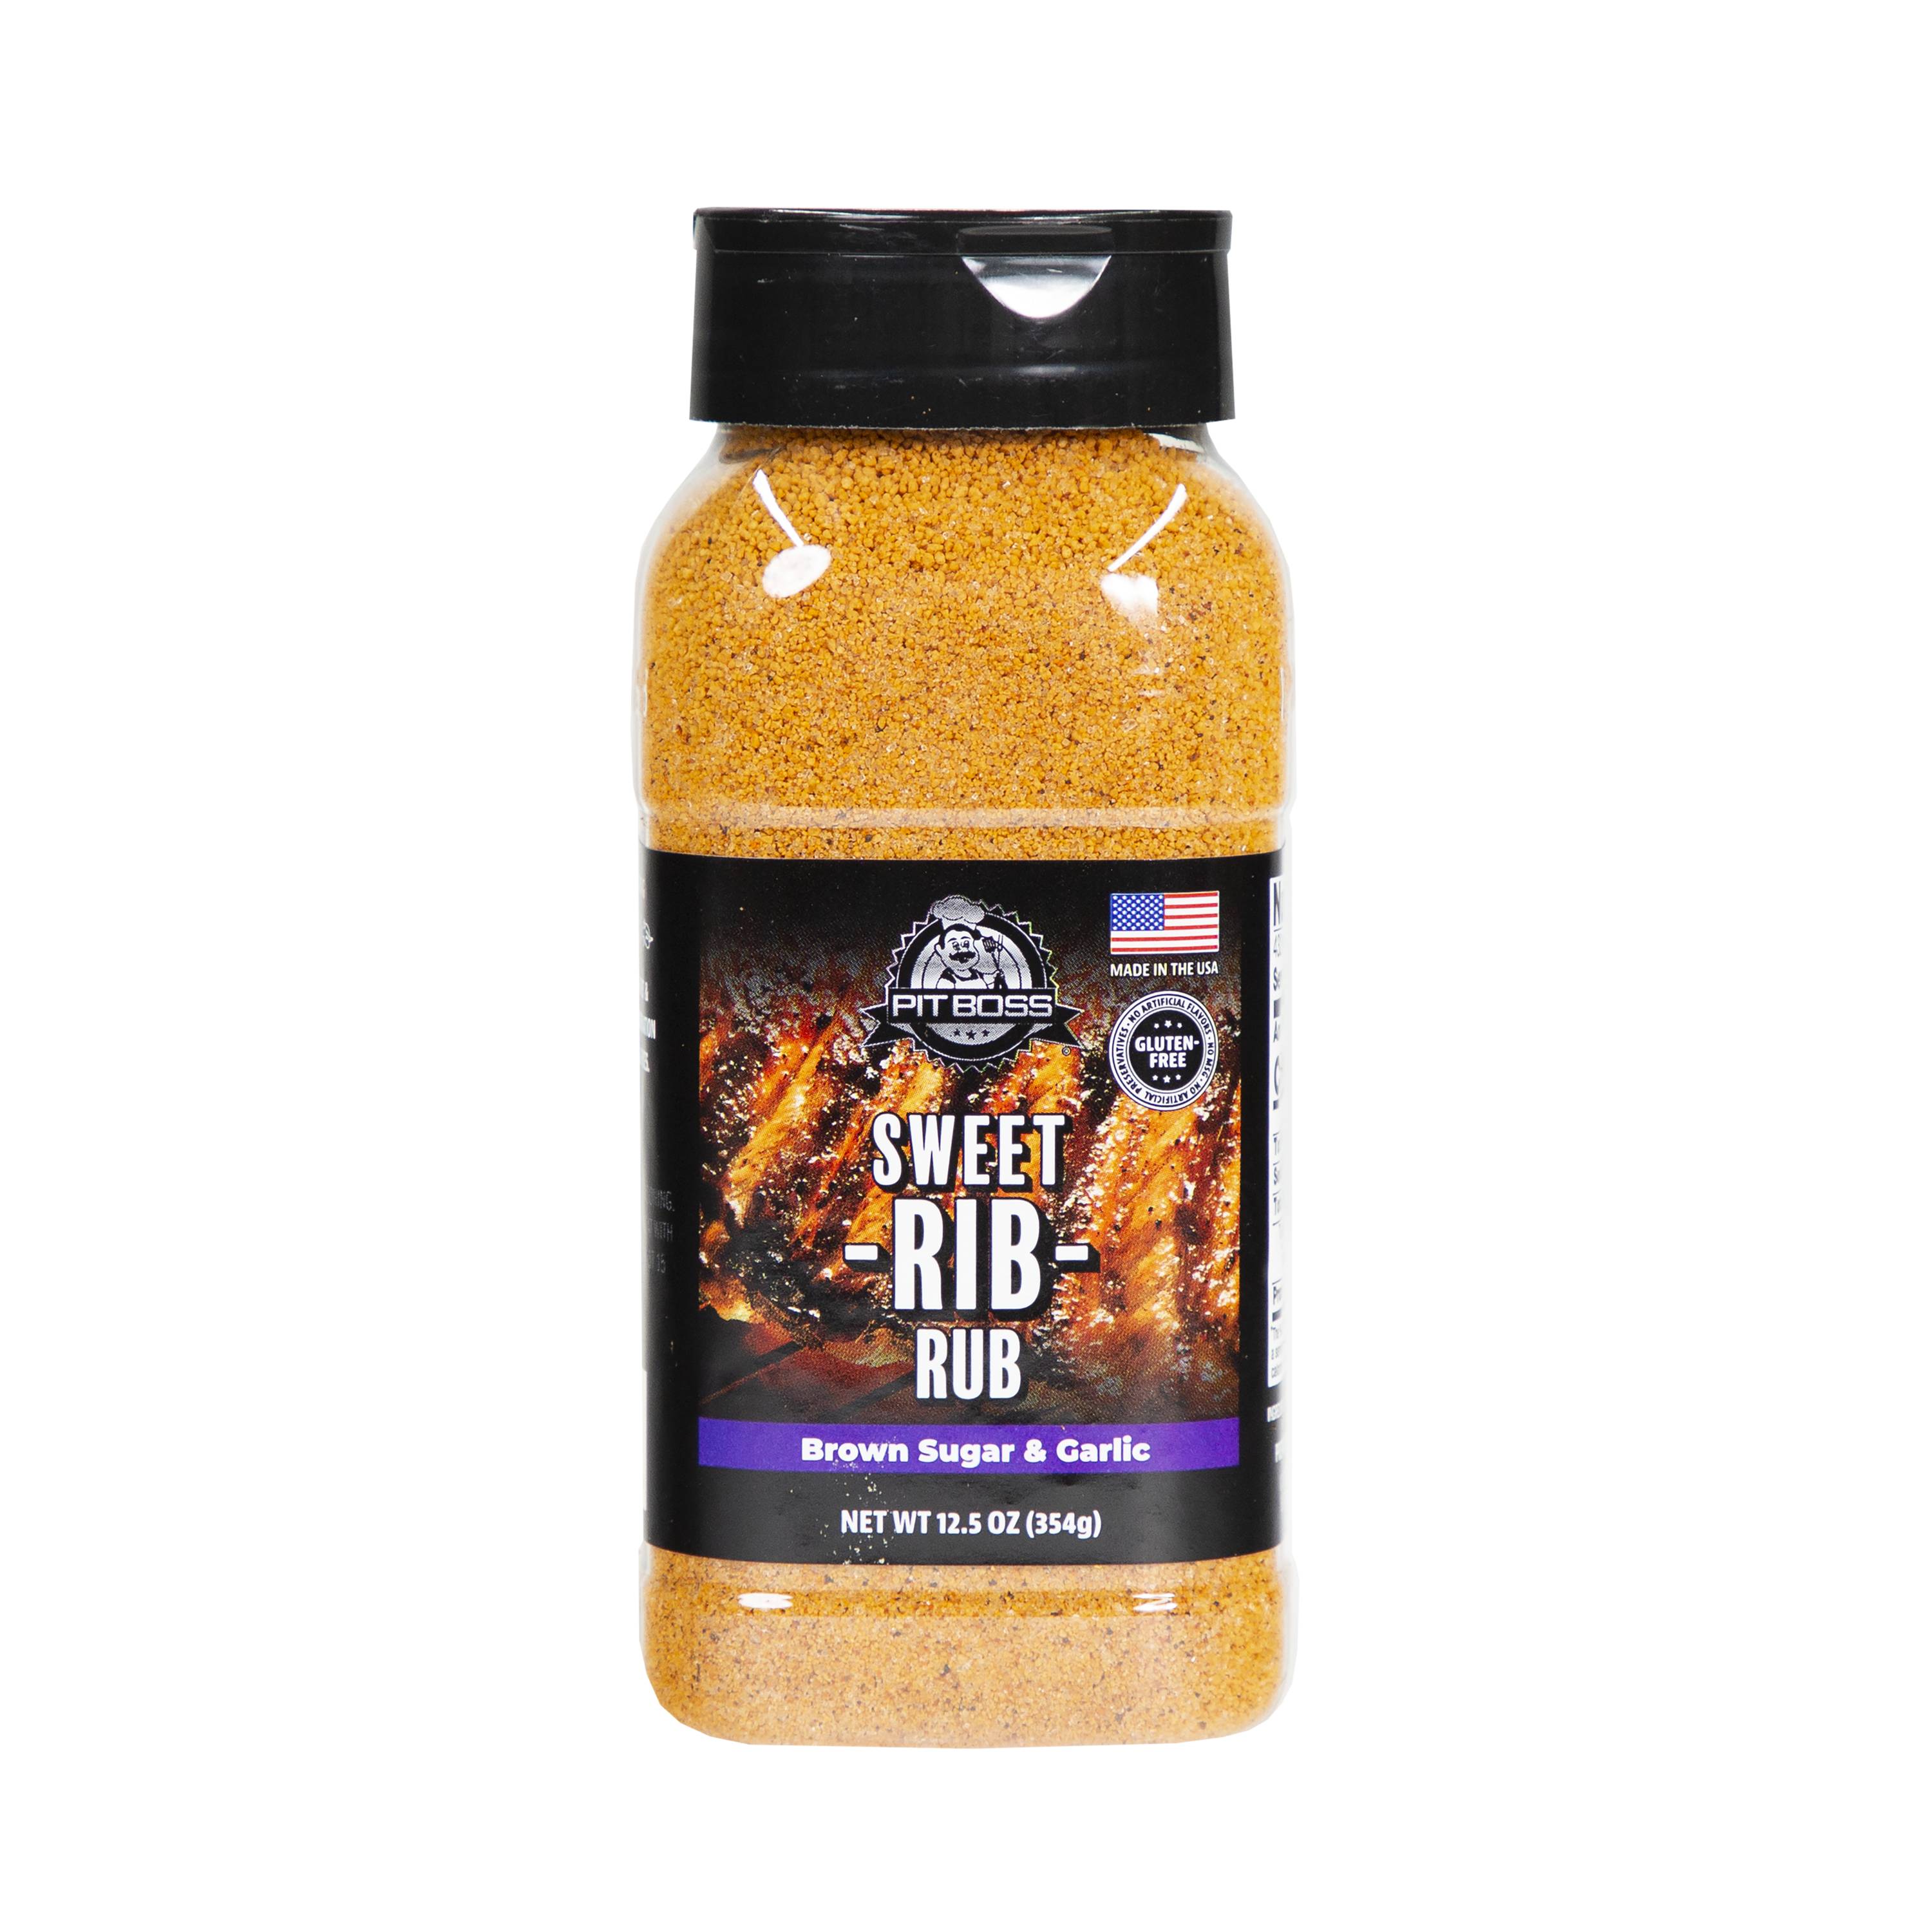 This BBQ rub is the real deal! - Backyard Grill Depot, LLC